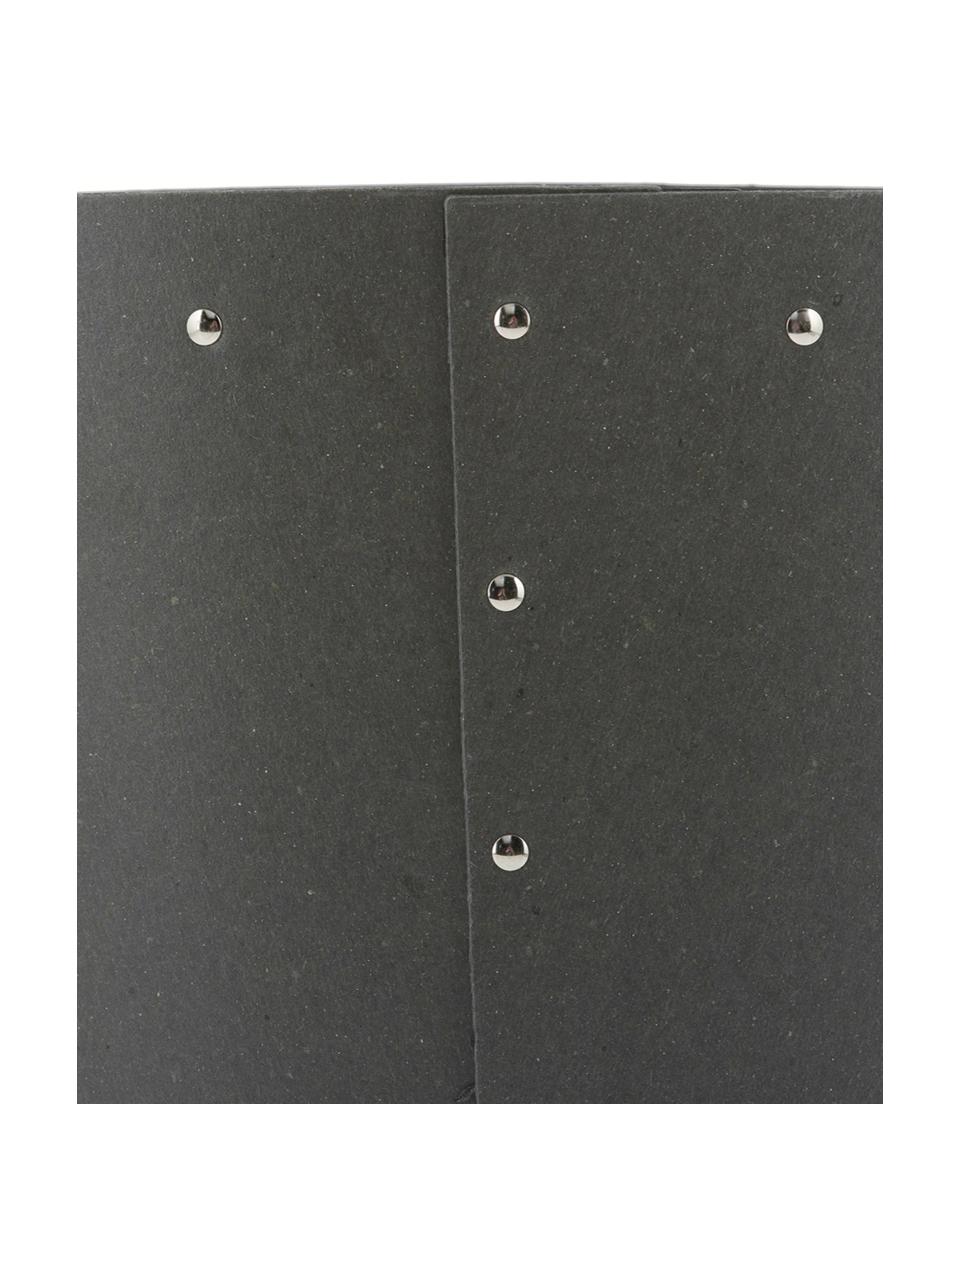 Papierkorb Aries aus Karton in Grau, Fester, laminierter Karton, Grau, Silberfarben, Ø 27 x H 35 cm